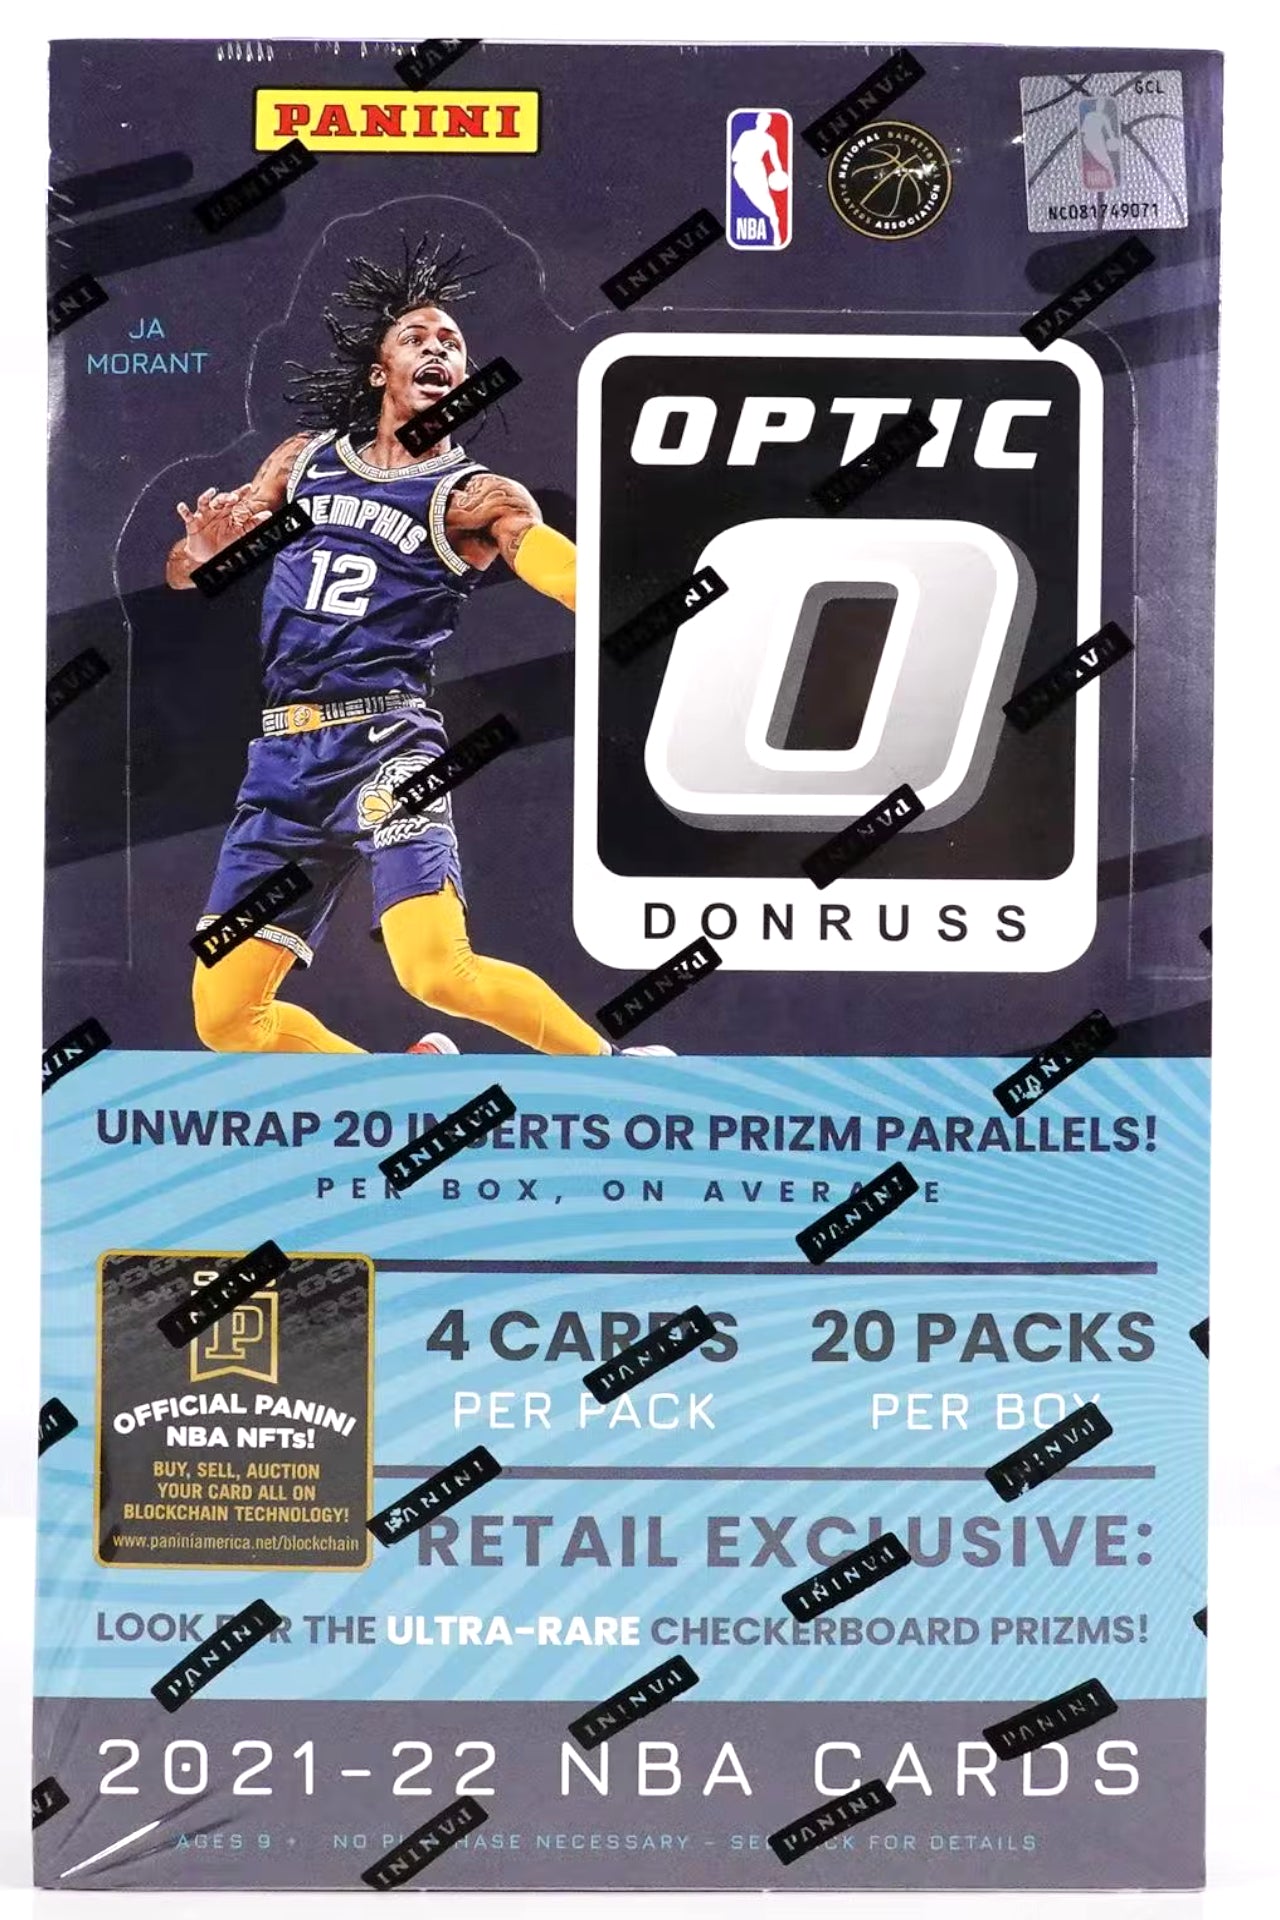 2021 Panini Donruss Optic Football 20-Pack Retail Box